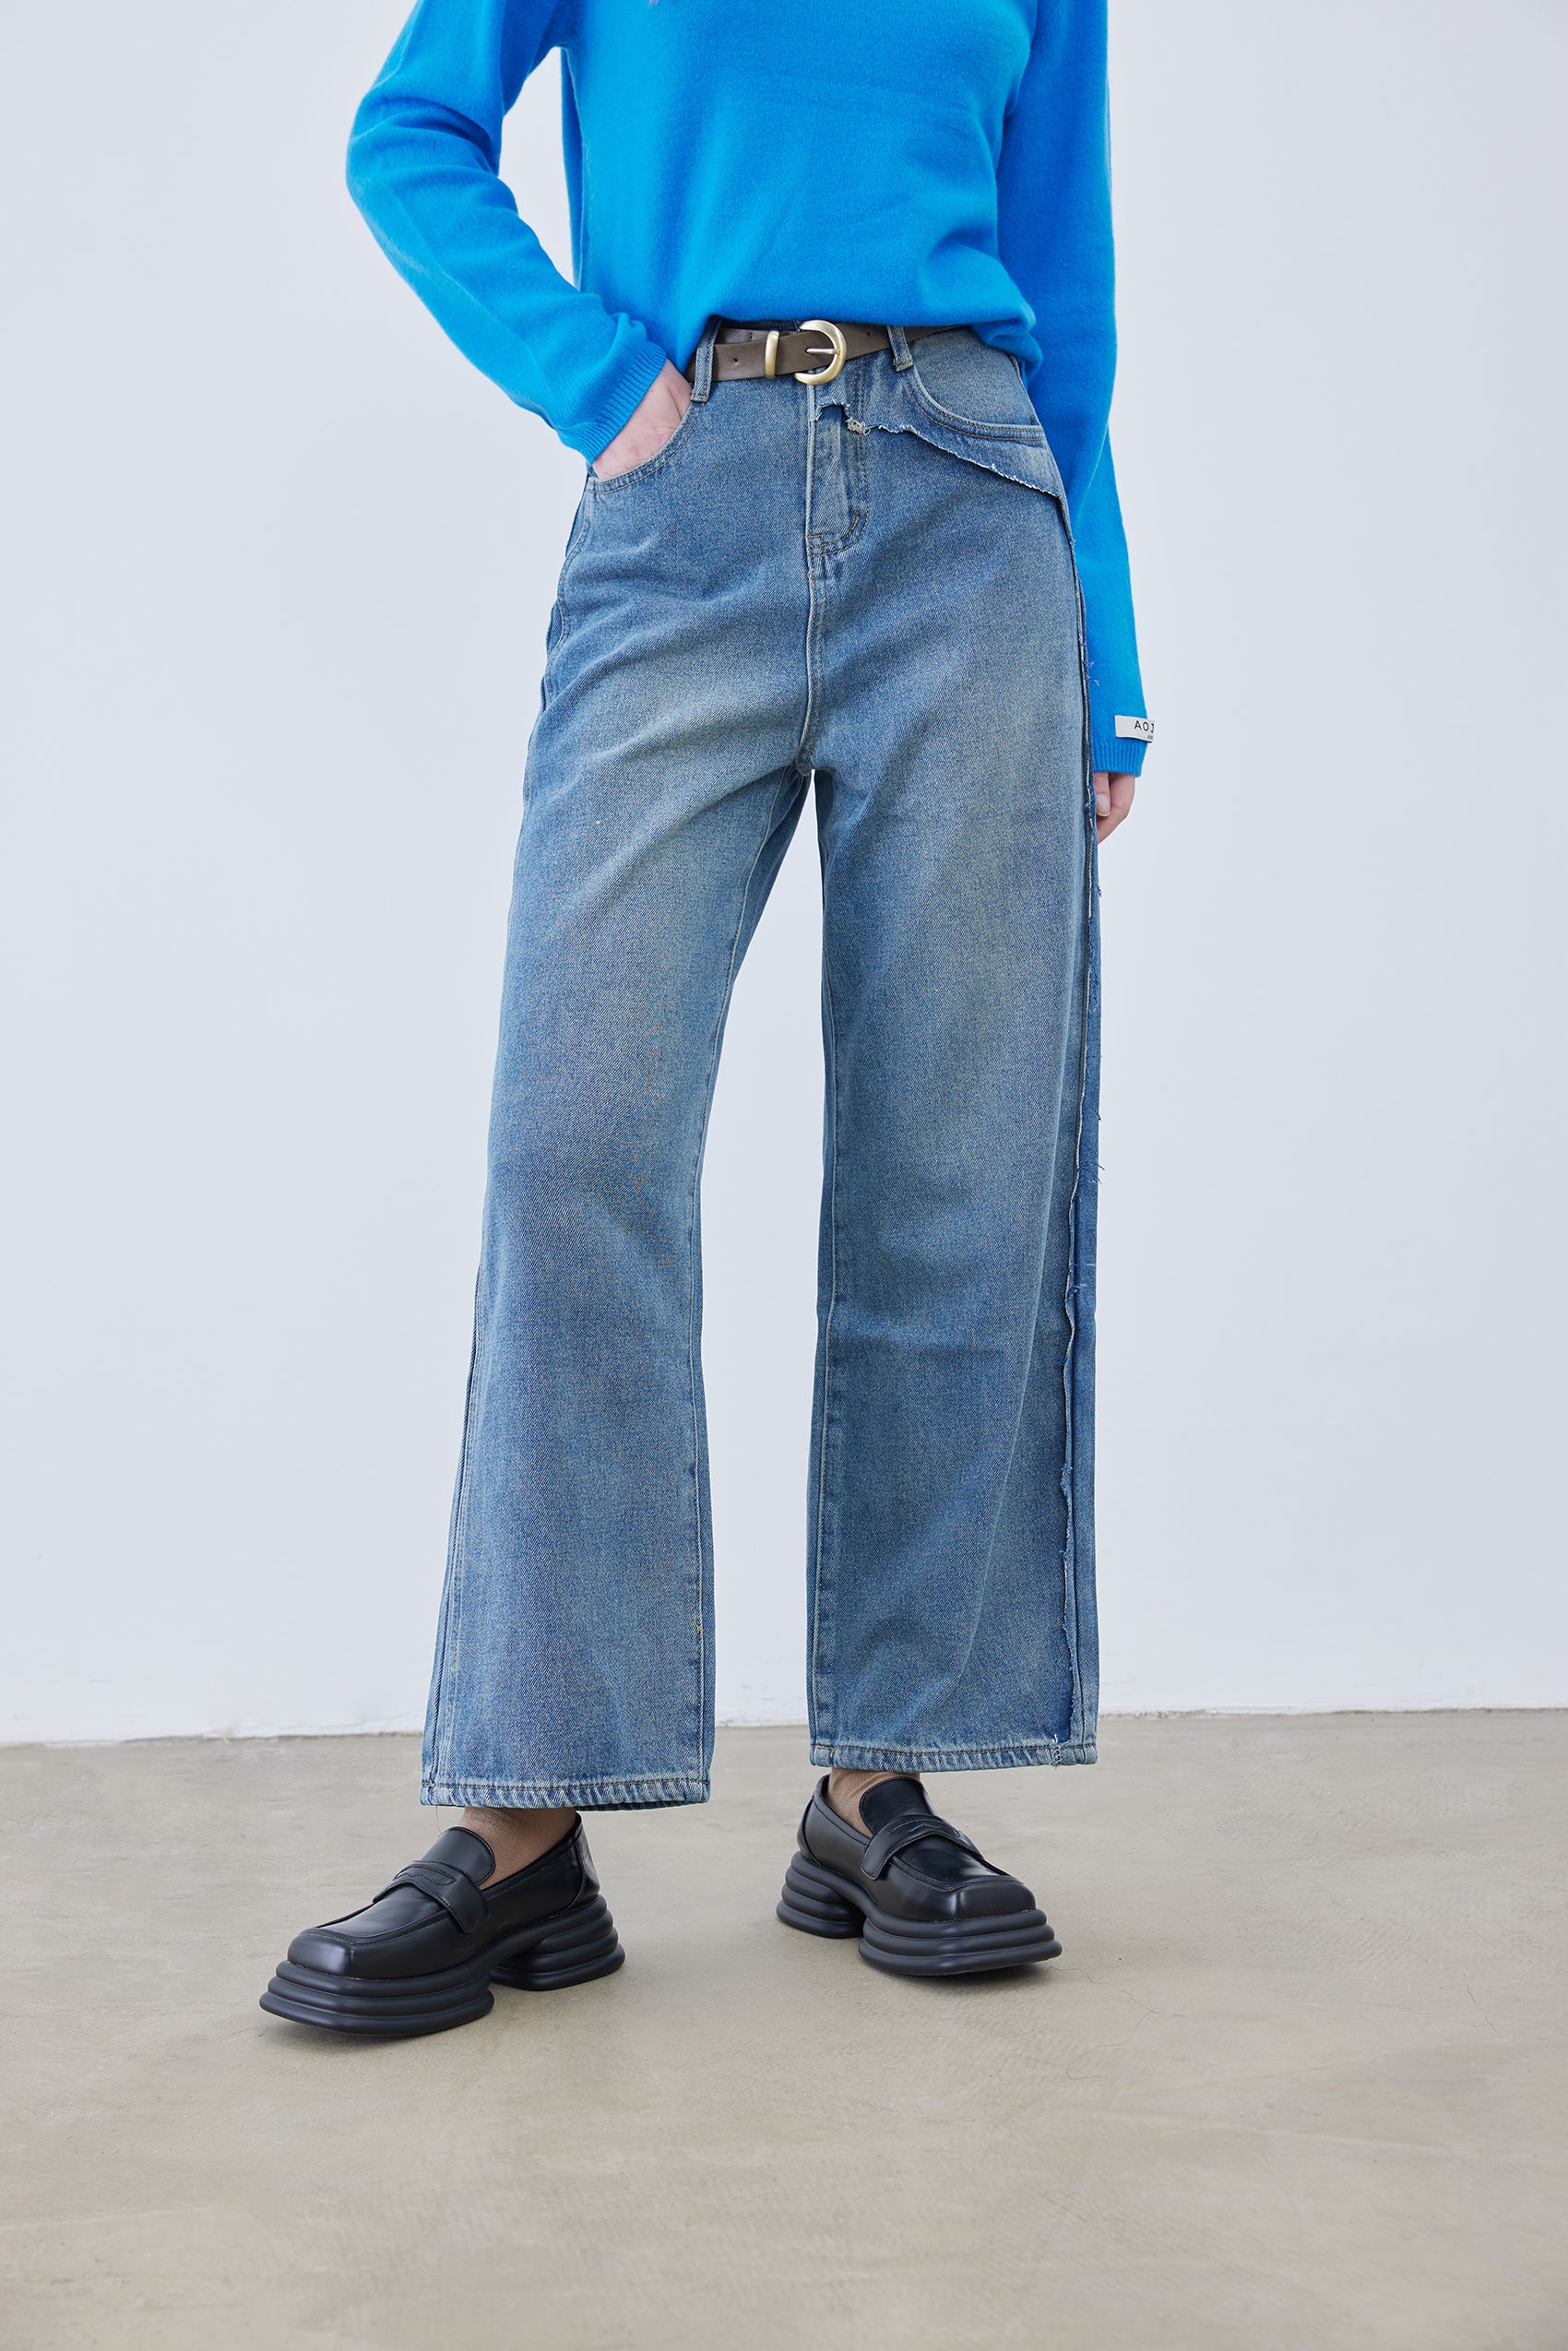 Asymmetrical distressed jeans